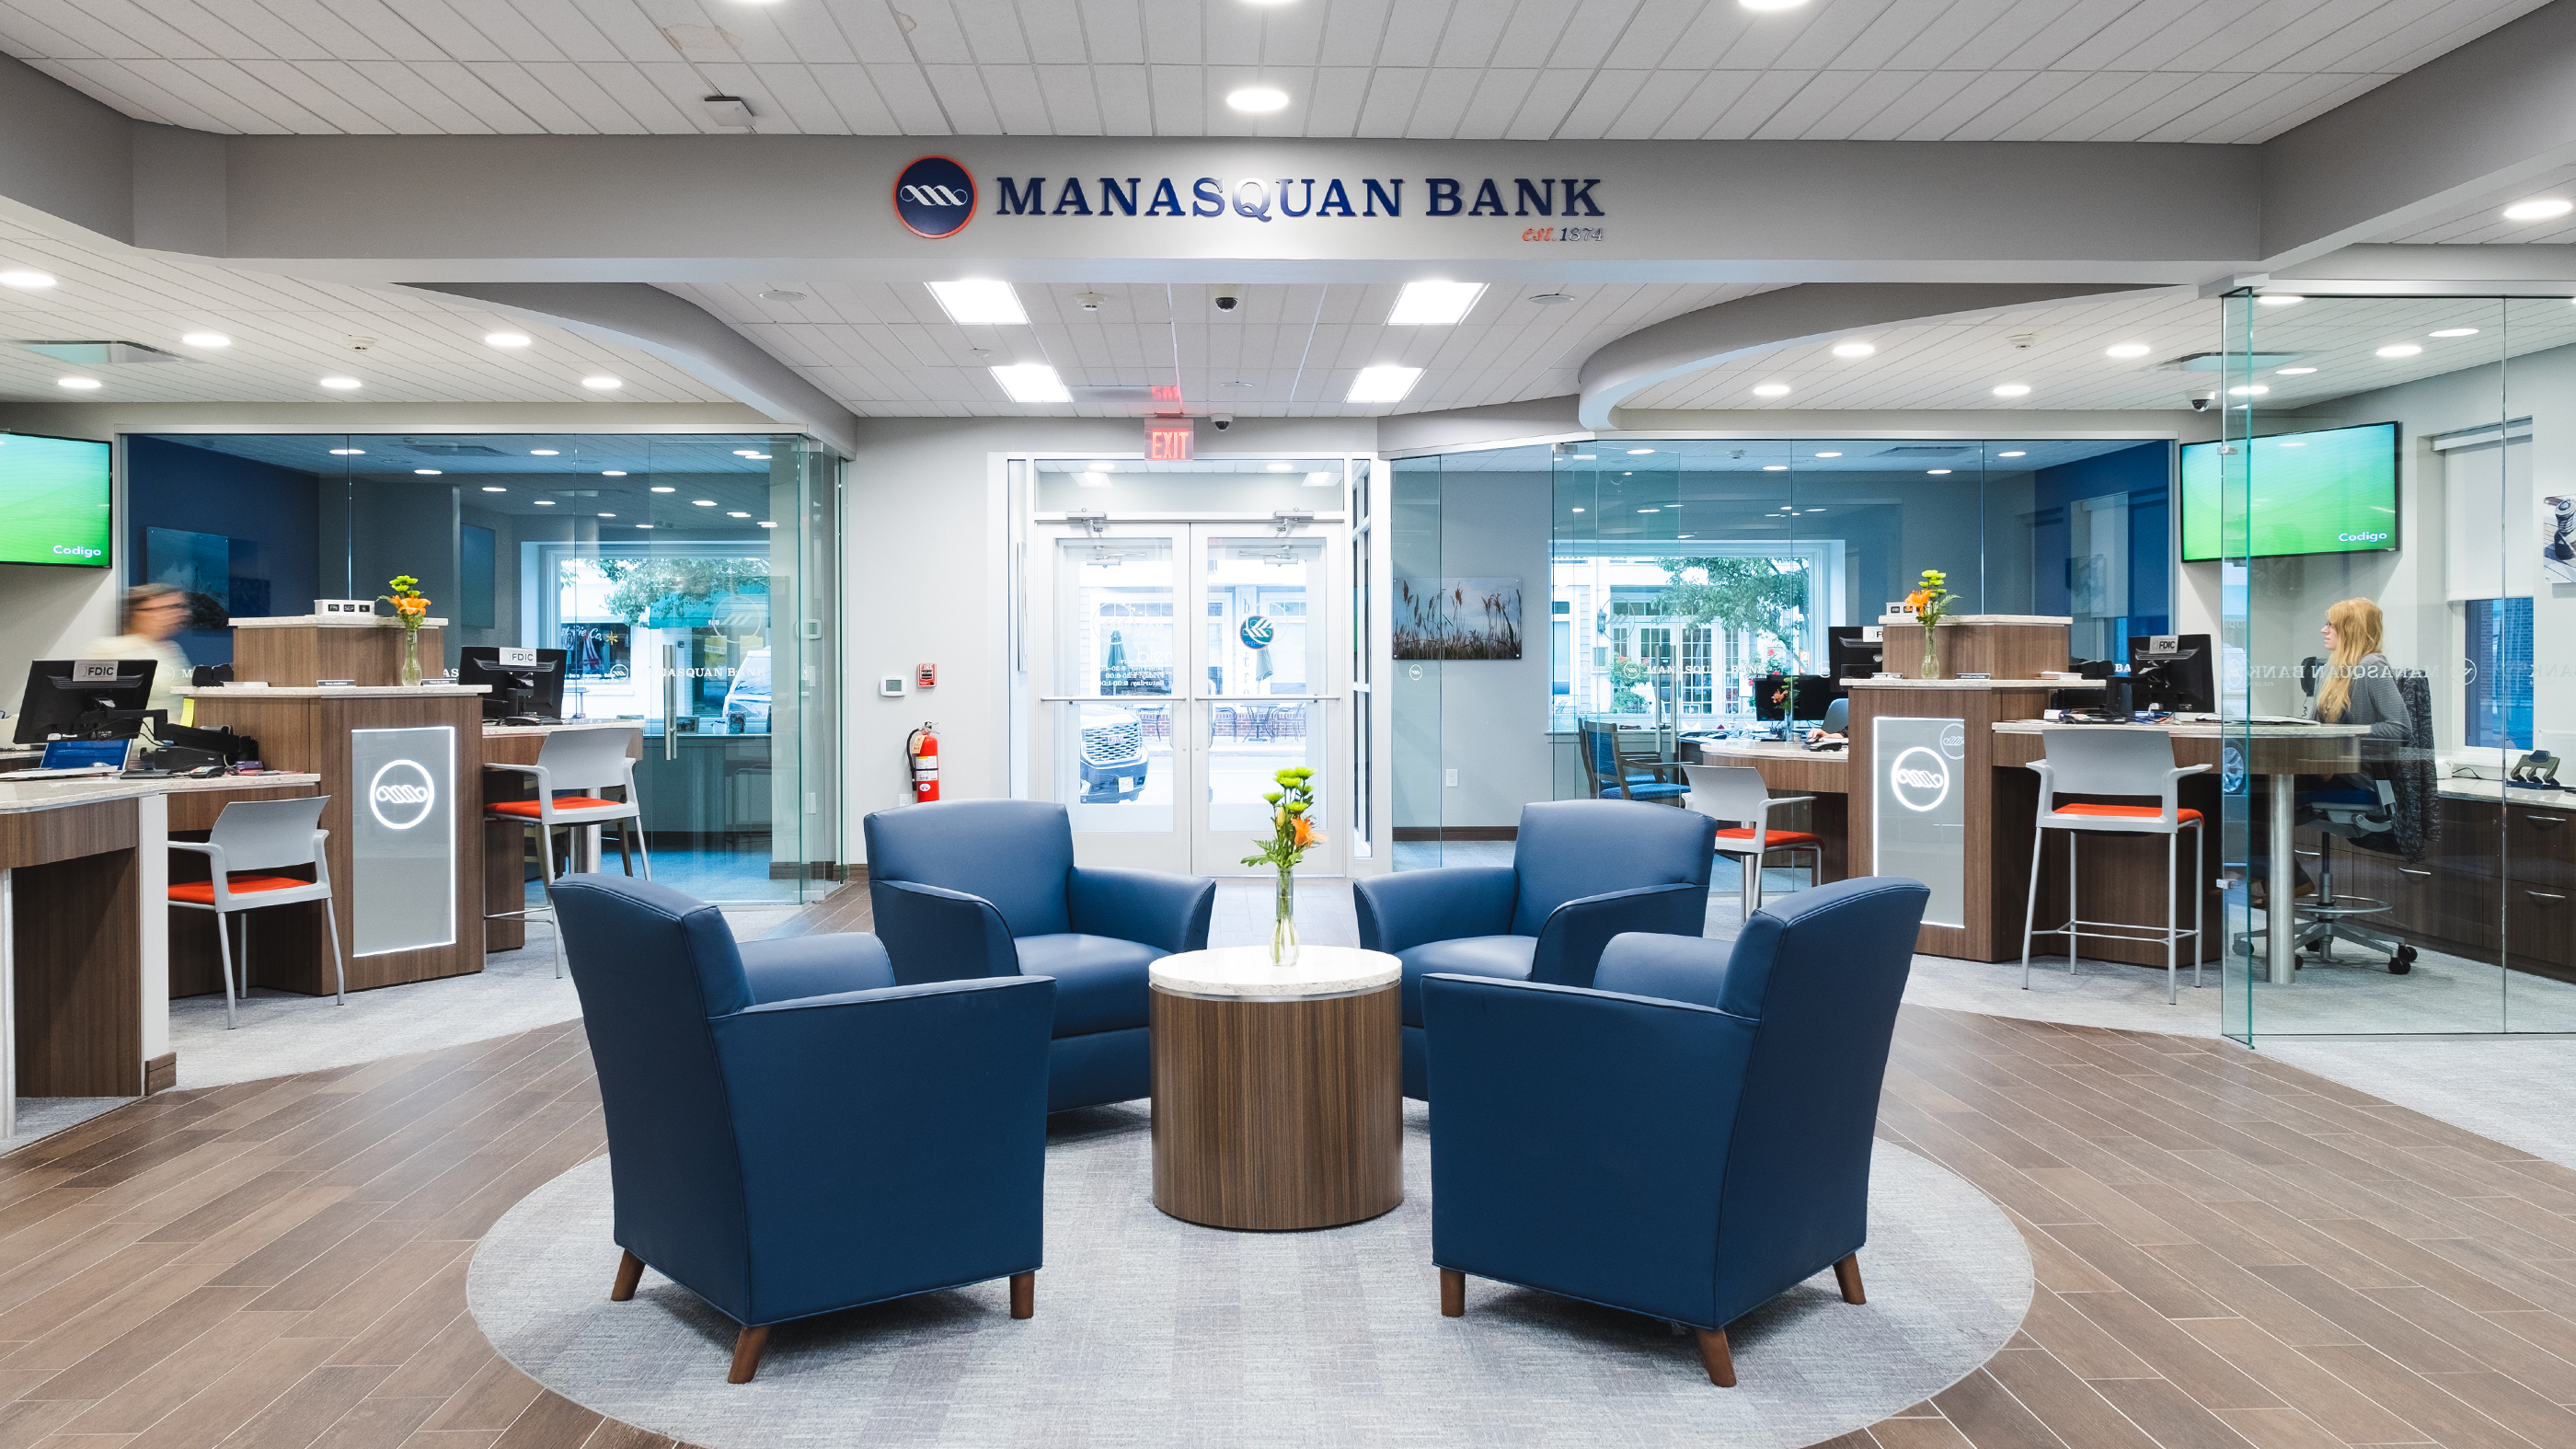 Manasquan Bank Brand Materials